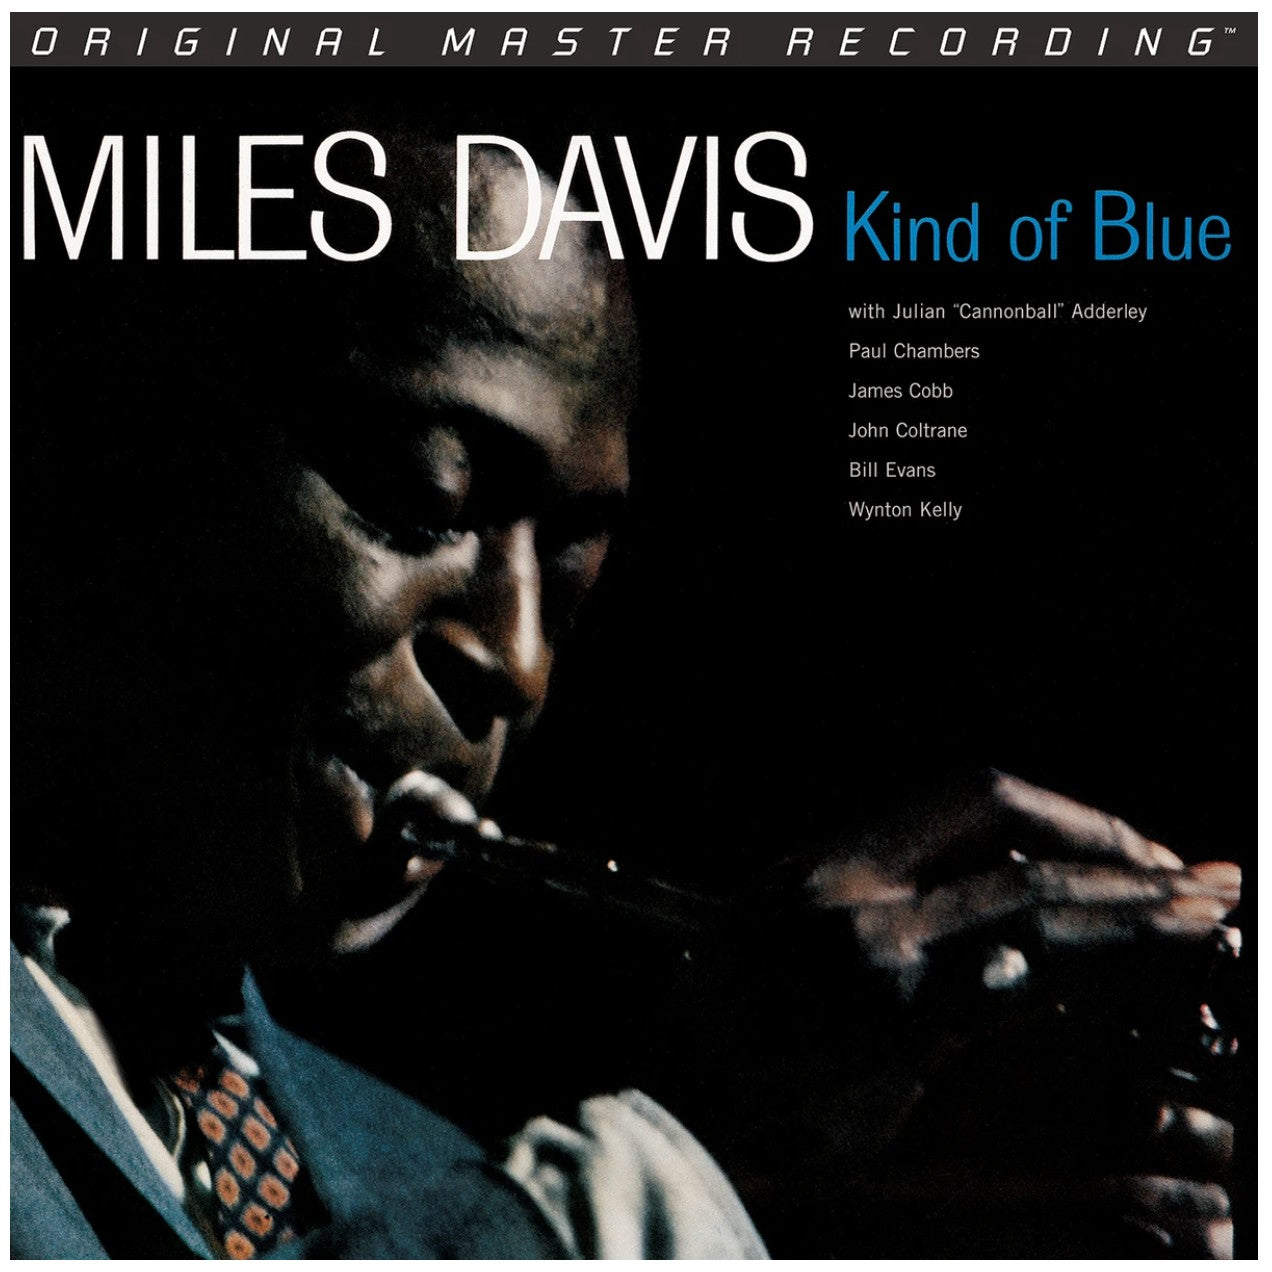 Miles Davis - Kind Of Blue [180 Gram Mobile Fidelity Numbered Limited Edition]